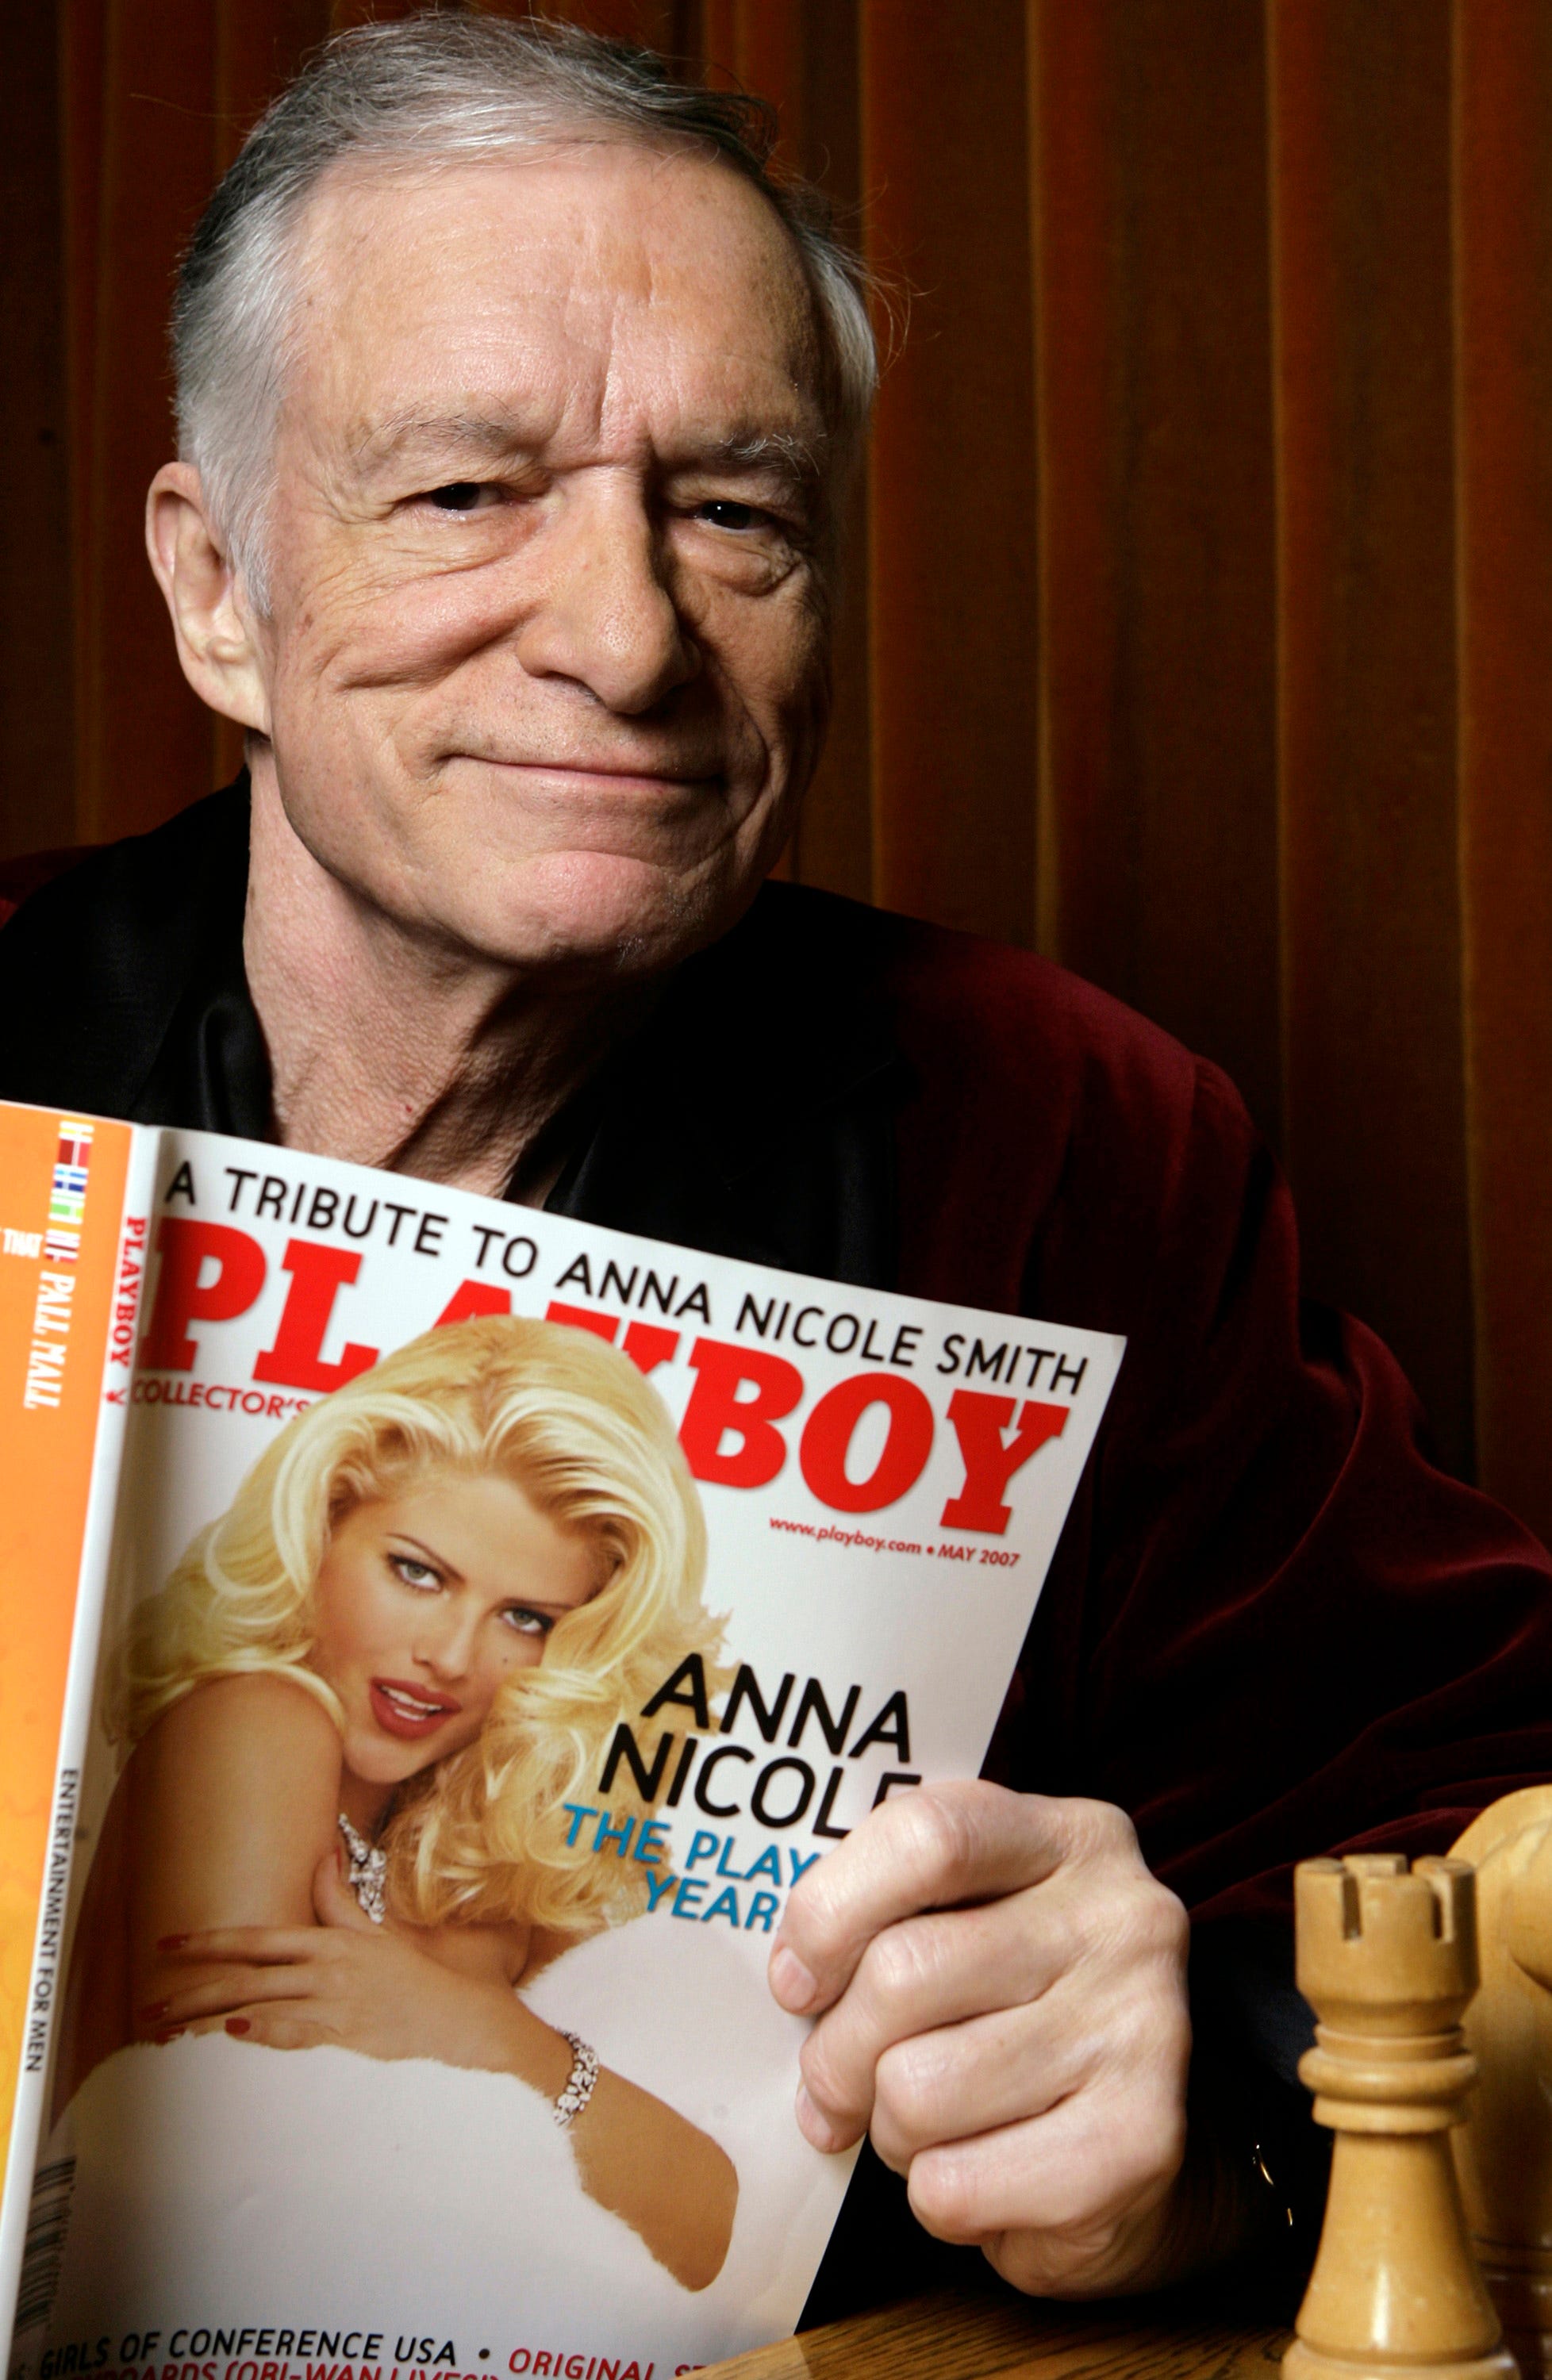 Xxx Hollywood Rape And - Secrets of Playboy': Hugh Hefner docuseries' biggest allegations